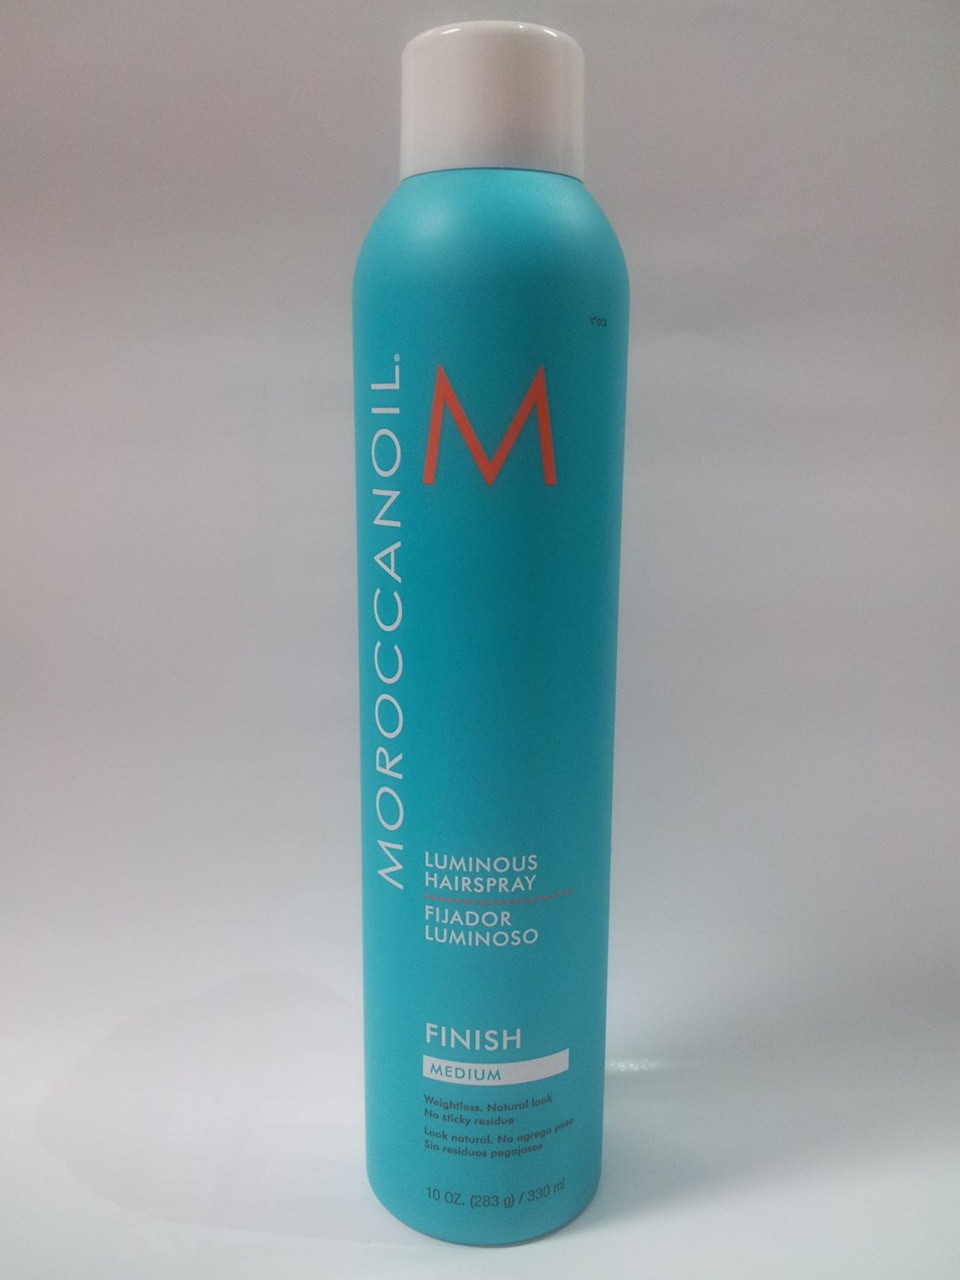 moroccanoil luminous hairspray 2 pack